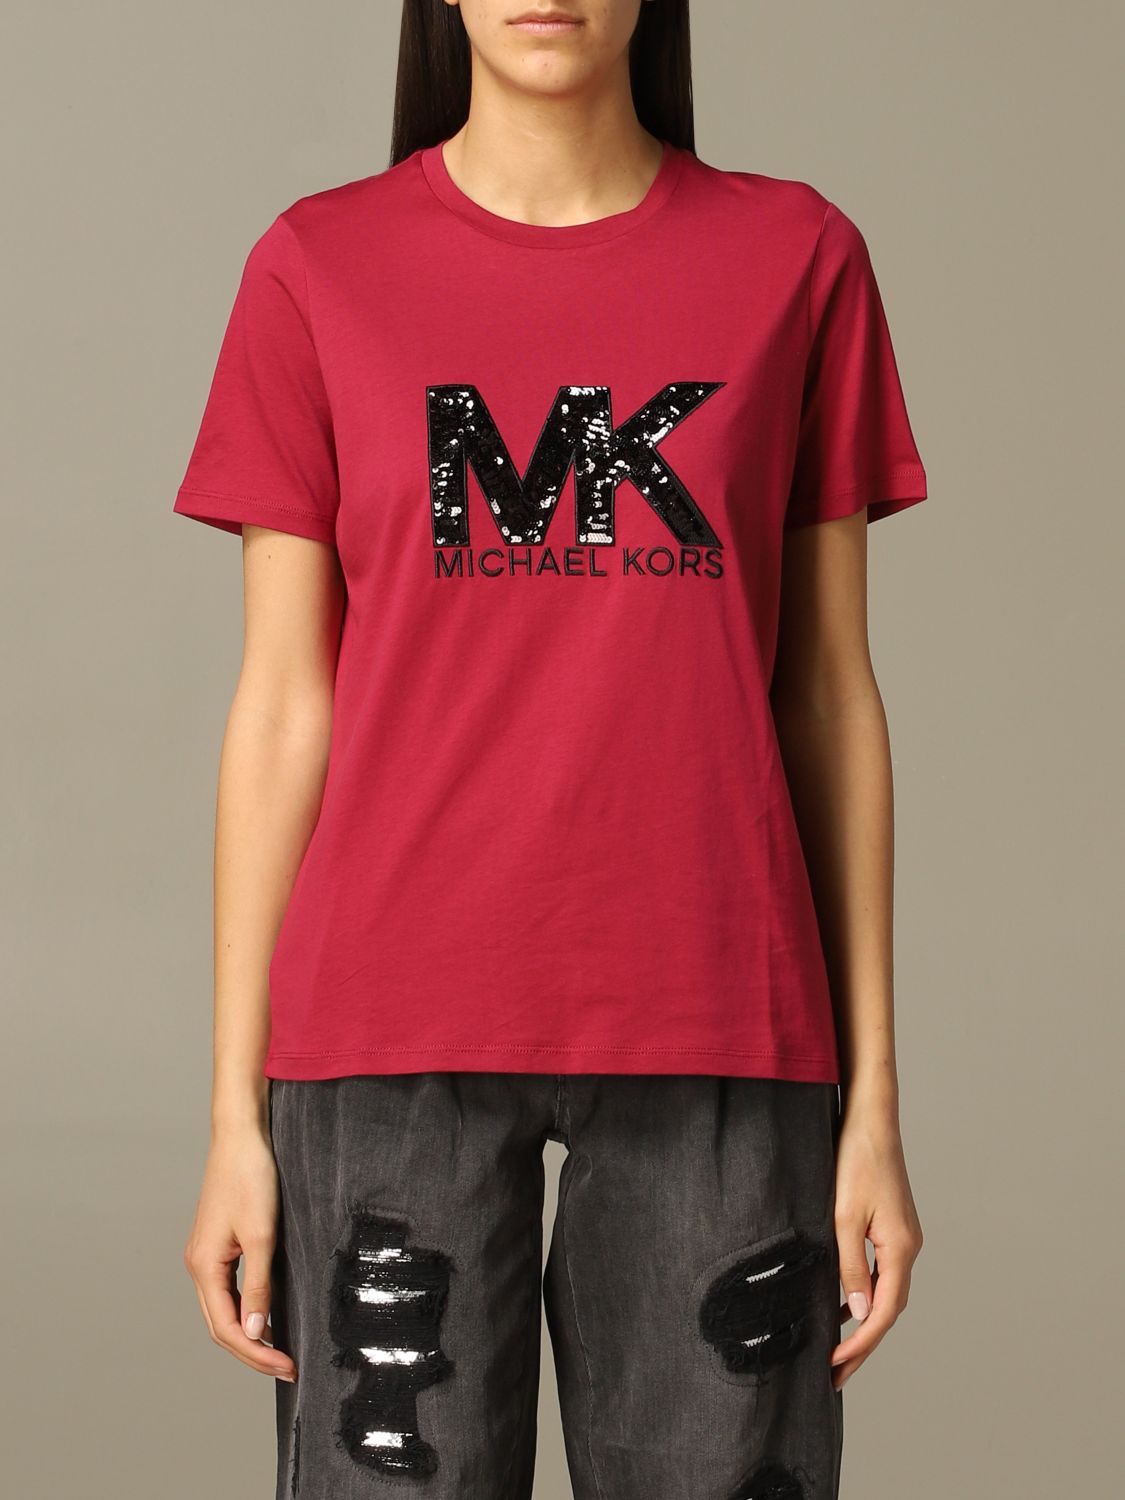 MICHAEL KORS: Michael t-shirt with sequin logo - Red | Michael Kors t-shirt  MH95MCE97J online on 